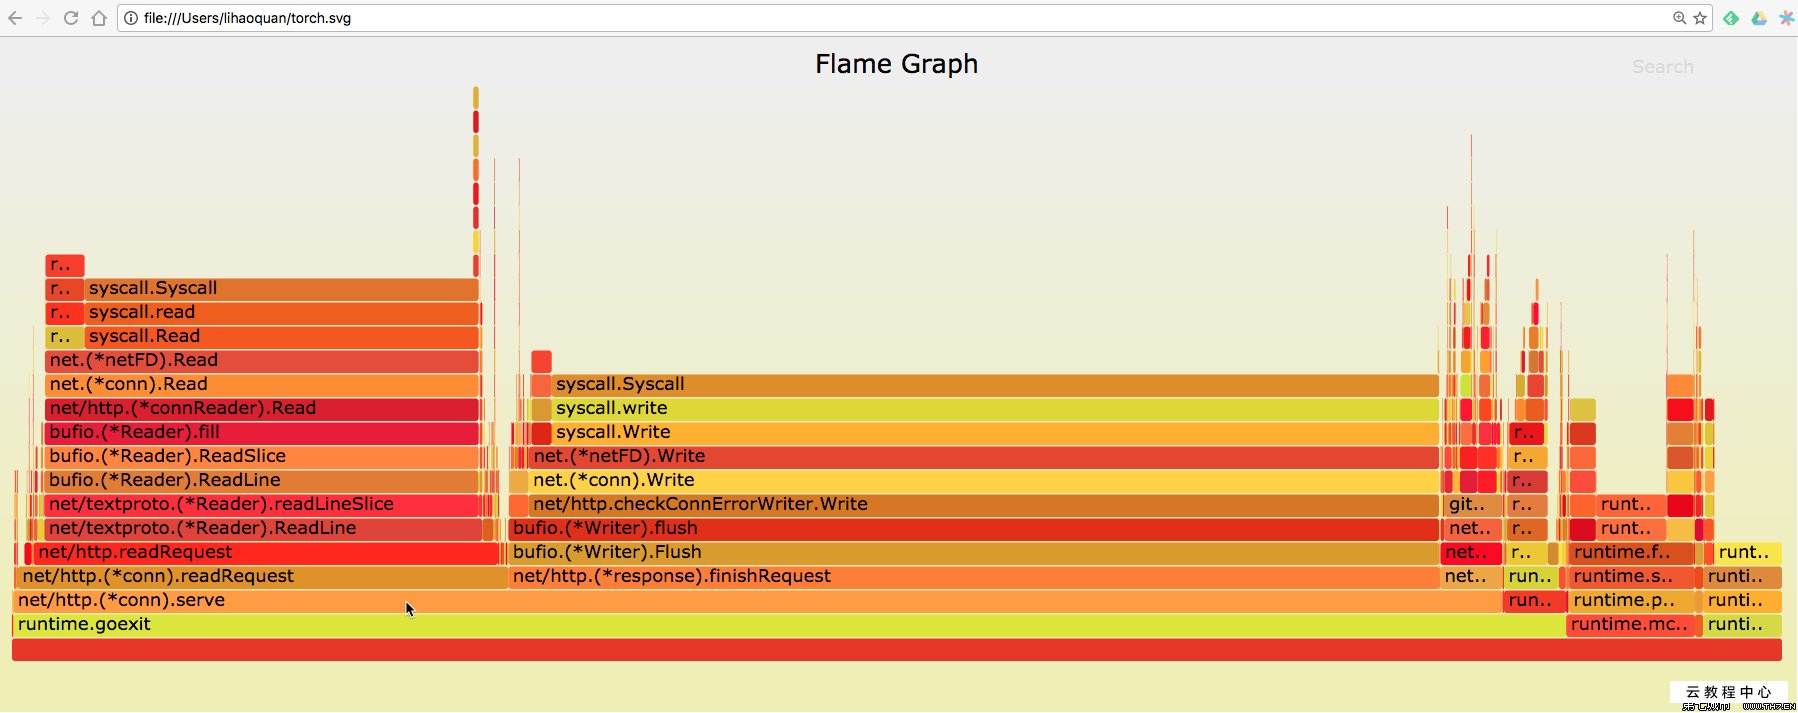 Flame Graph